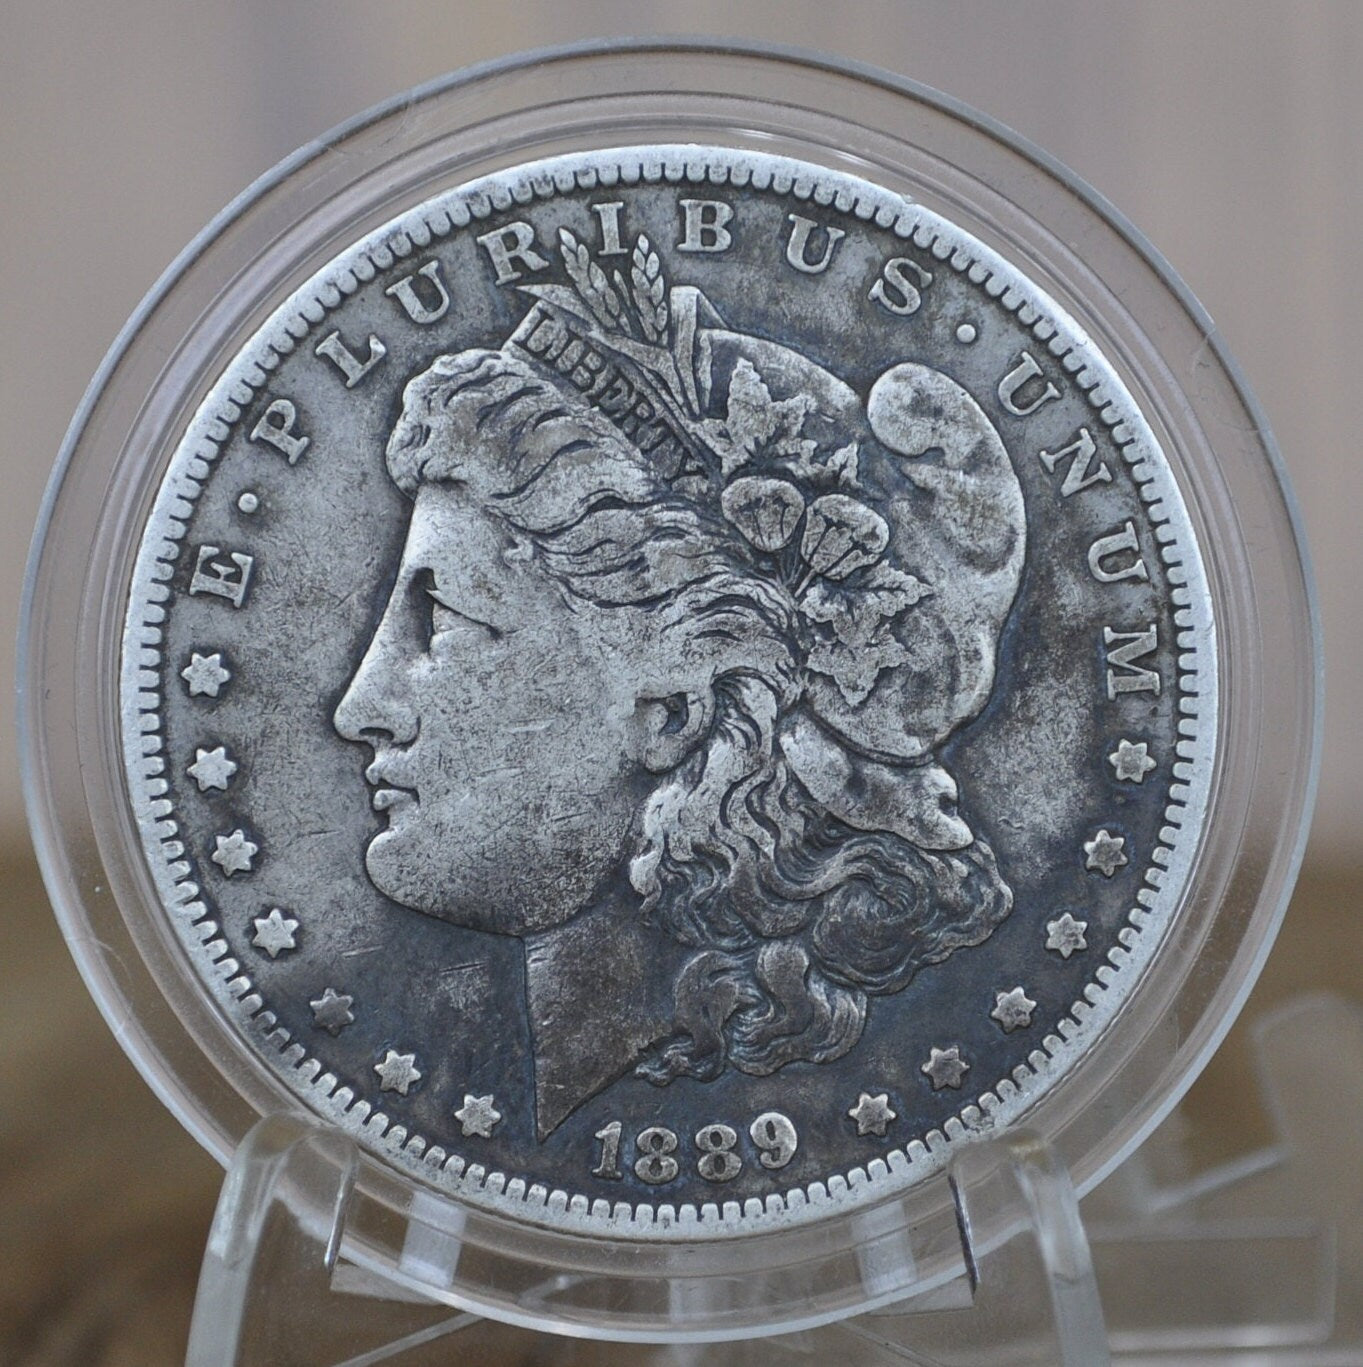 1889-O Morgan Silver Dollar - Choose by Grade / Condition - 1889-O Morgan Dollar - 1889 Silver Dollar - O Mint Mark - Good Date